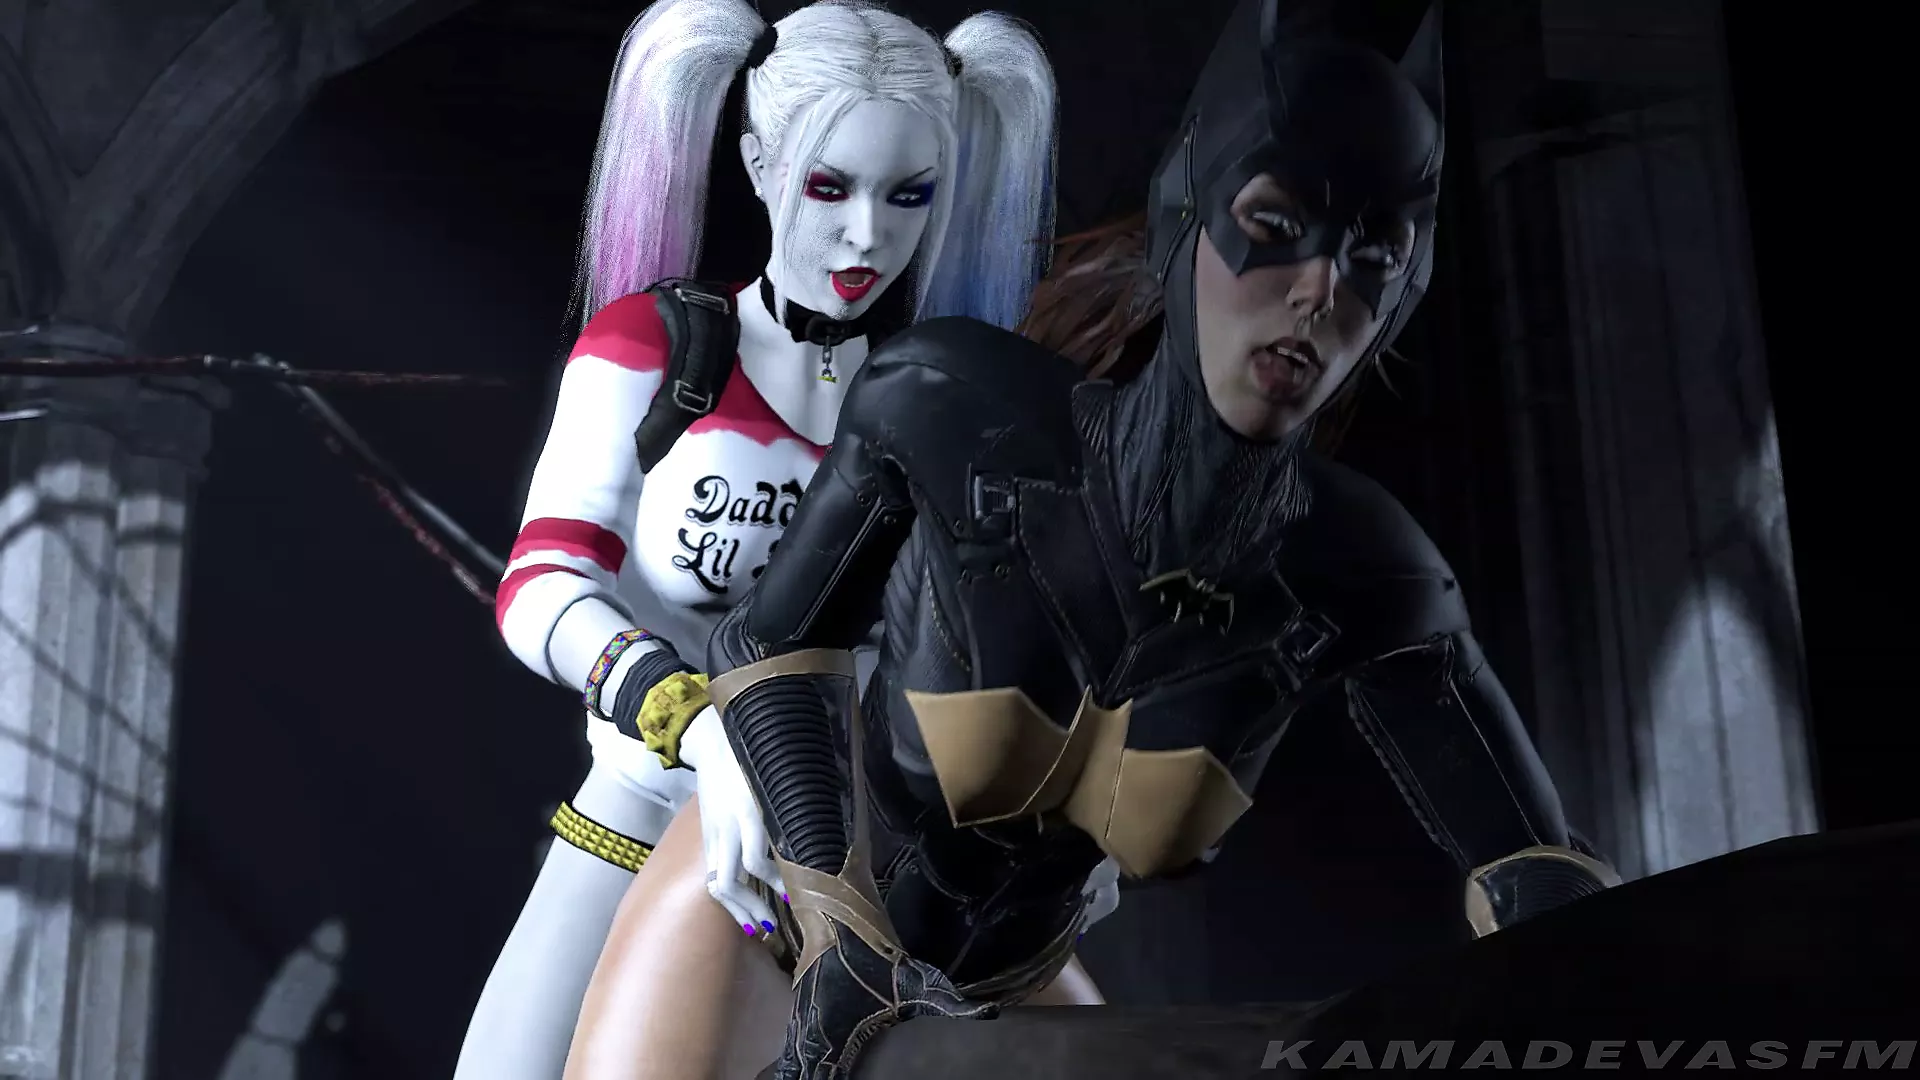 Batman Porn Pussy - Harley Quinn Batman Porn Asylum - Episode 3 watch online or download